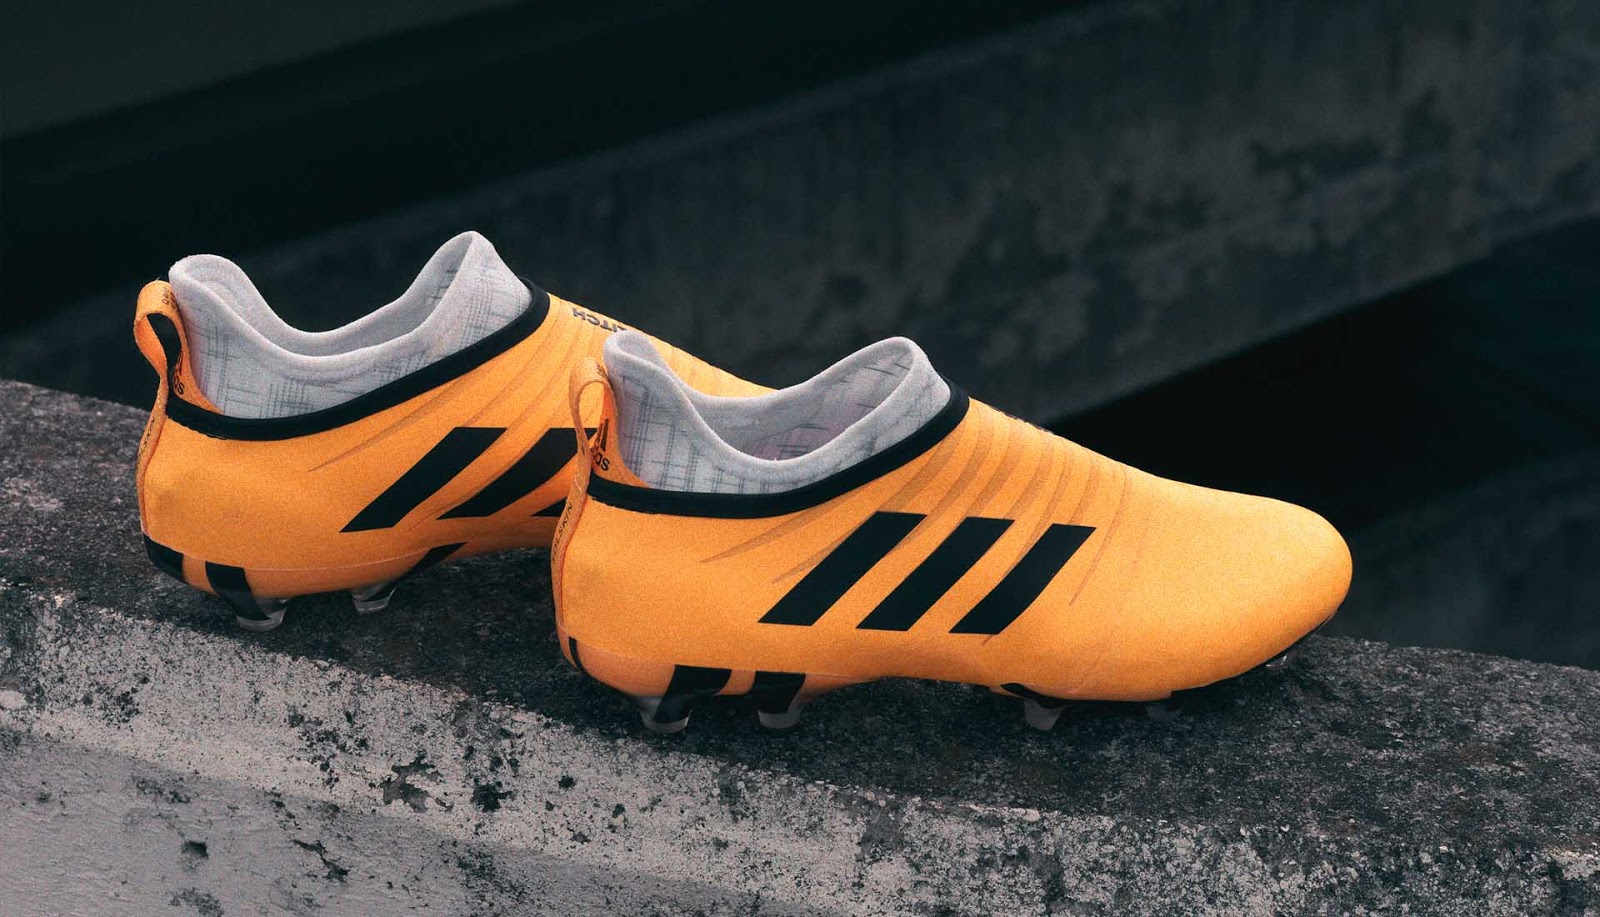 Oeste despreciar alma Adidas Glitch 18 Sol Boots Pack Released - Footy Headlines